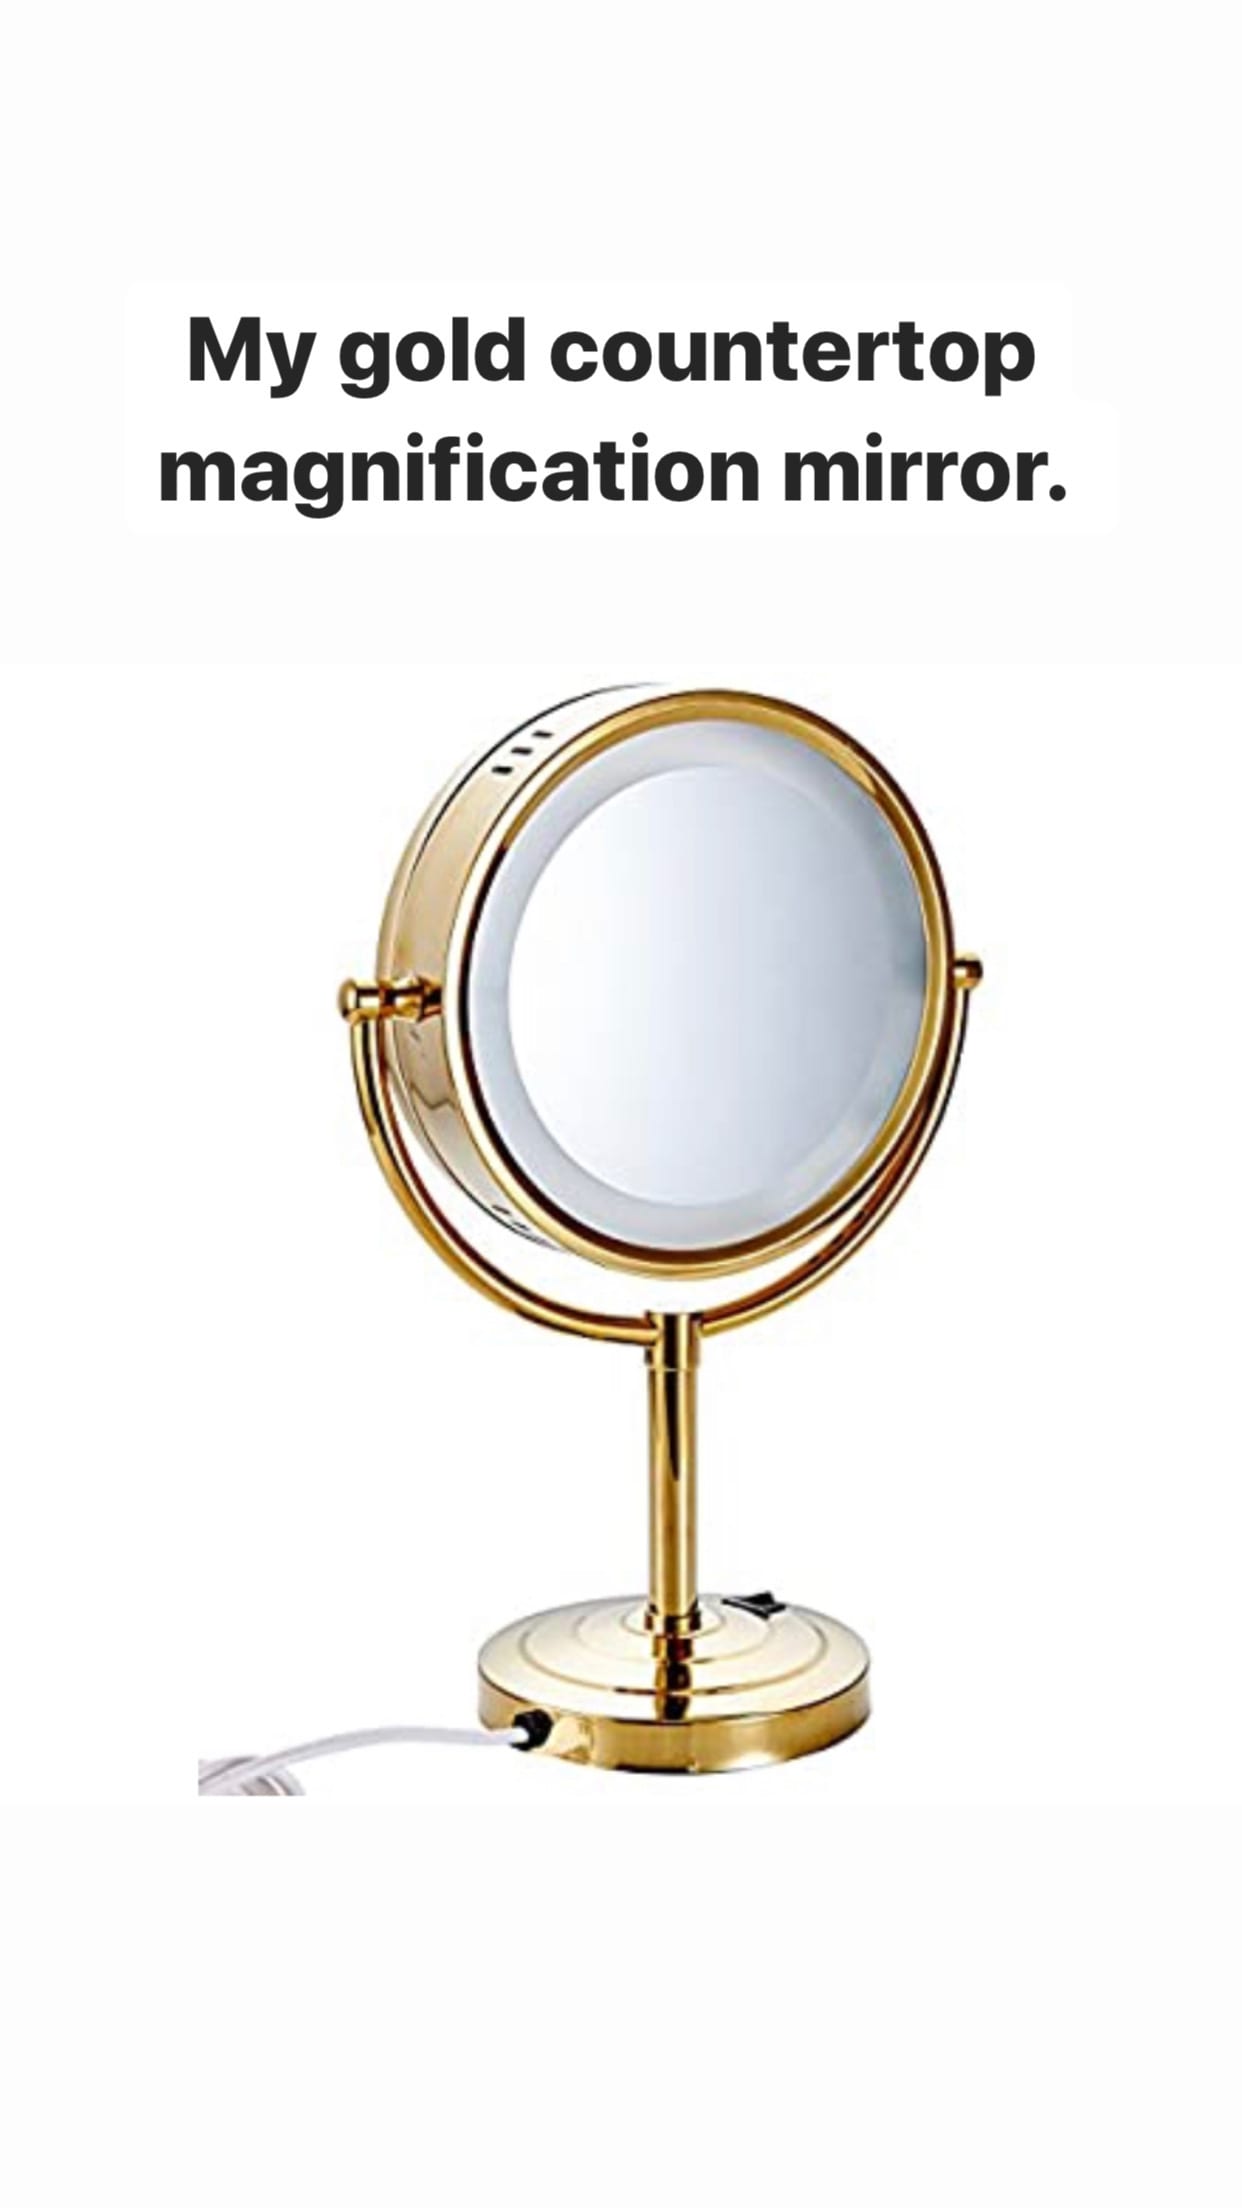 magnification mirror